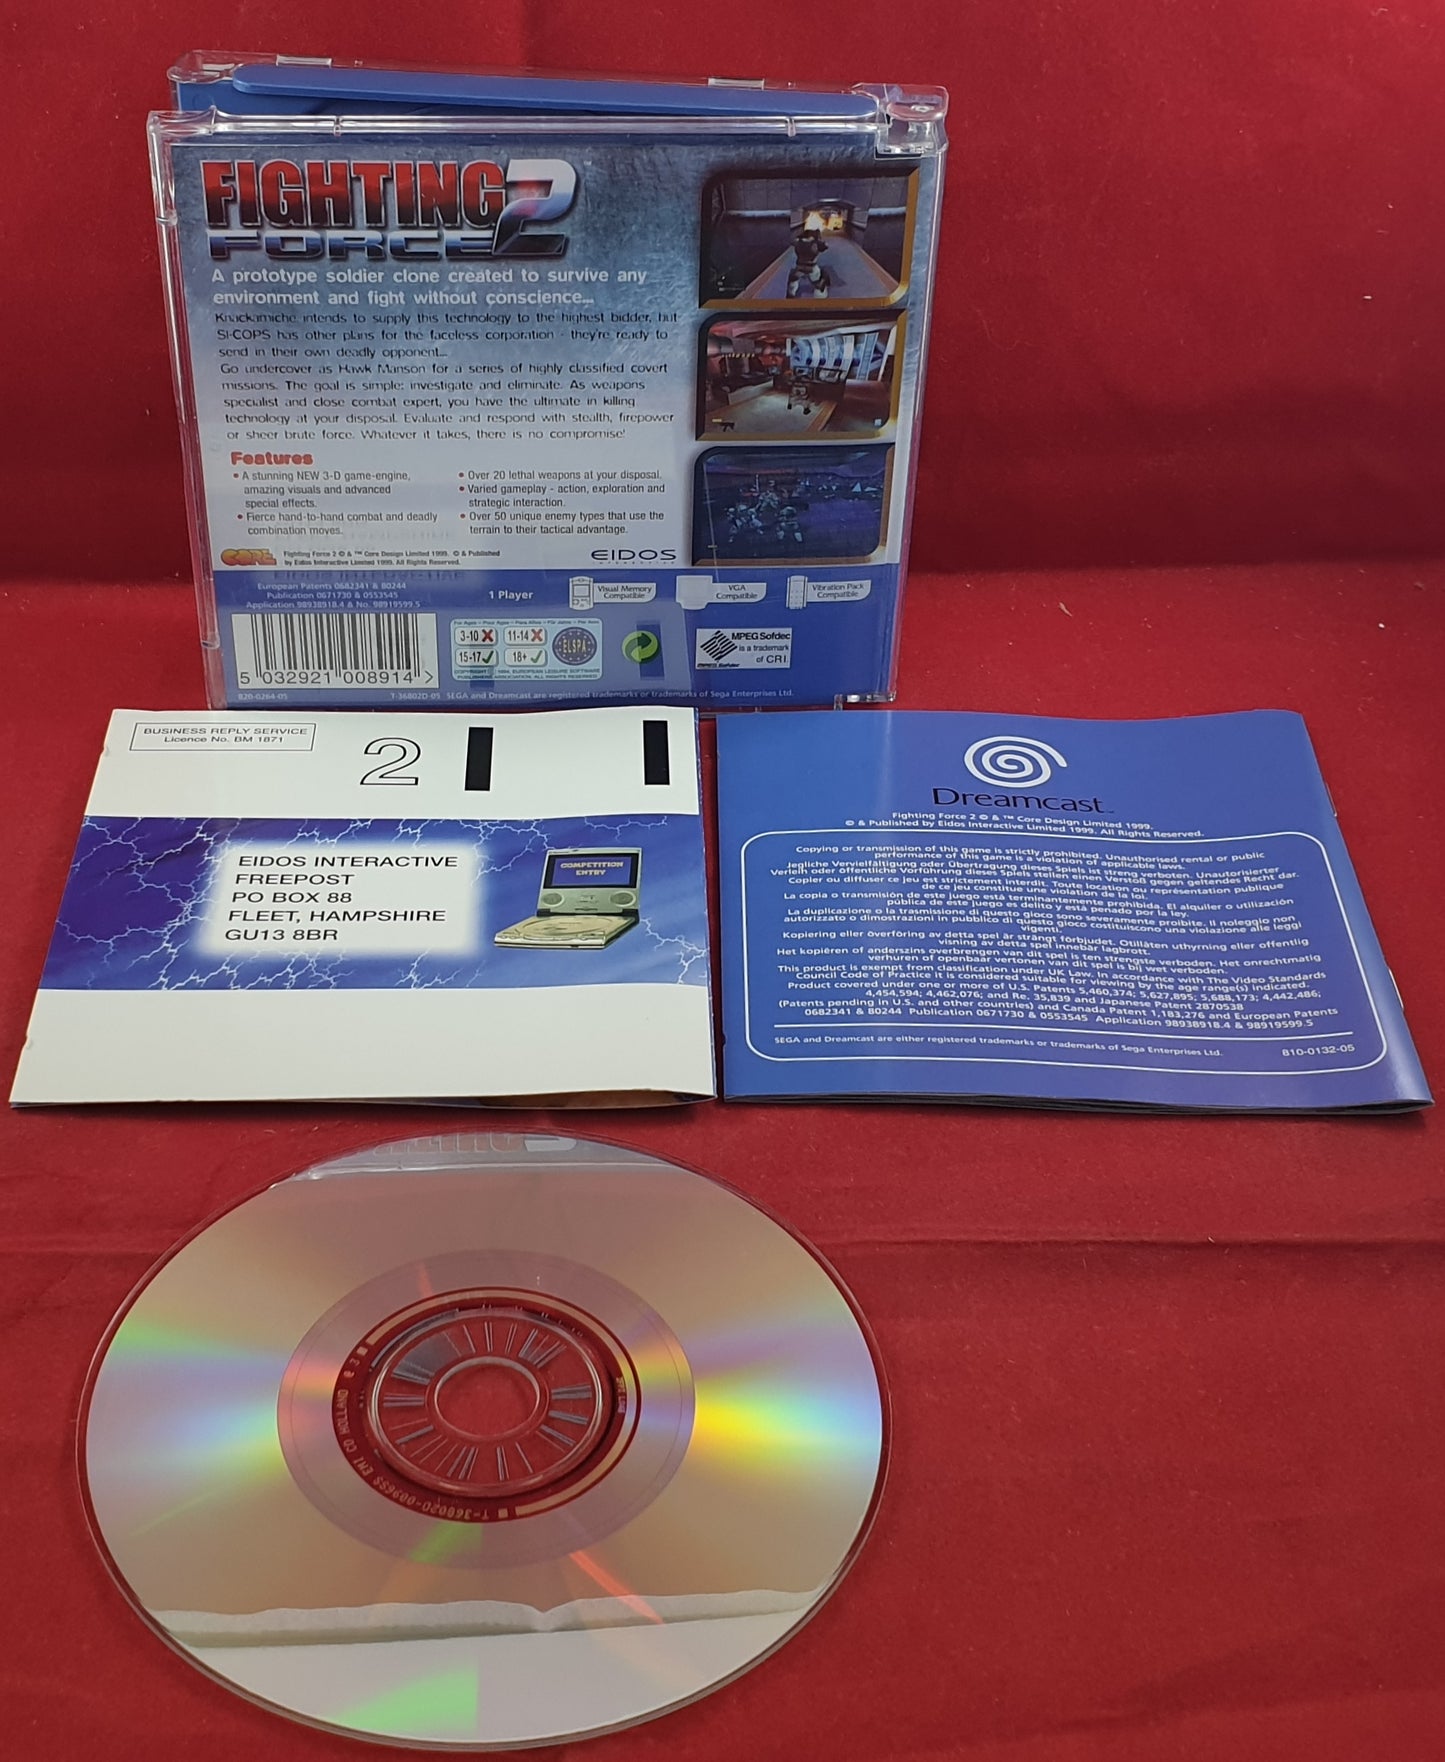 Fighting Force 2 Sega Dreamcast Game